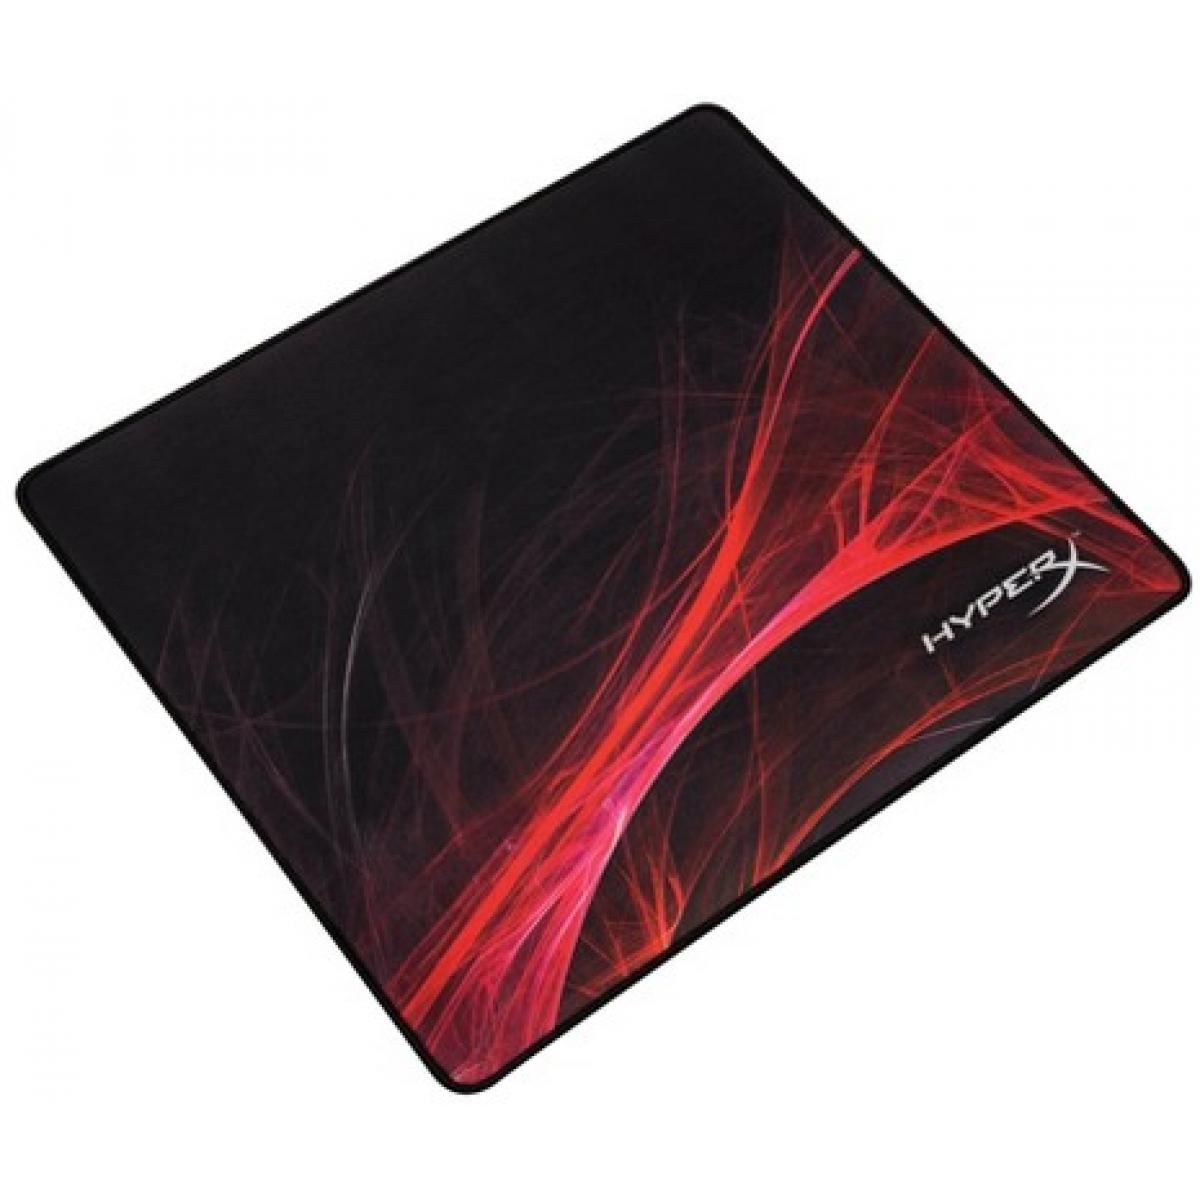 HyperX FURY Pro Gaming MousePad - Medium